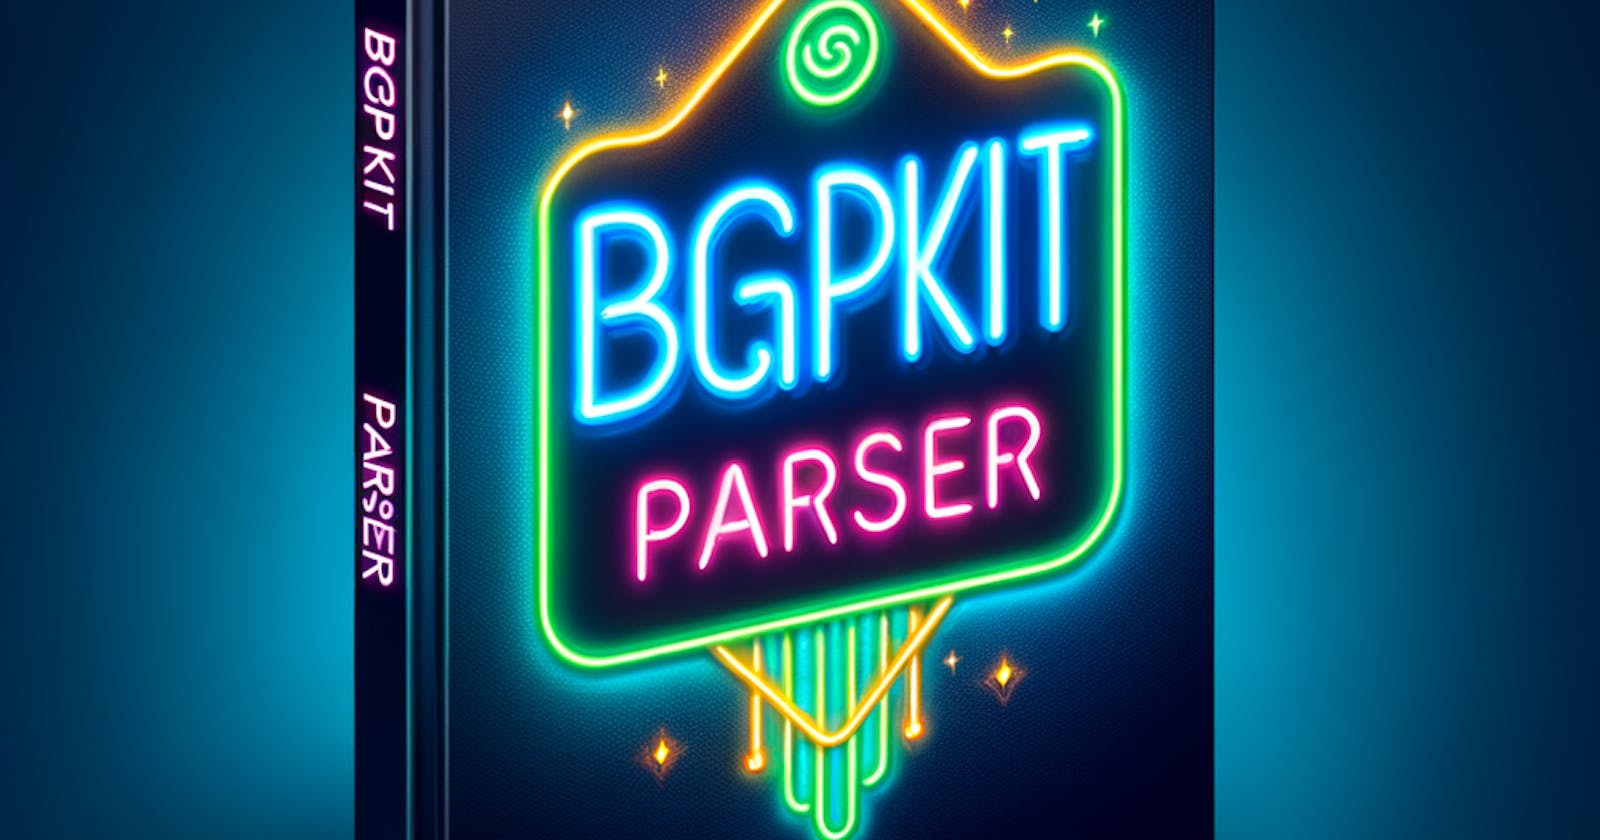 Introducing BGPKIT Parser